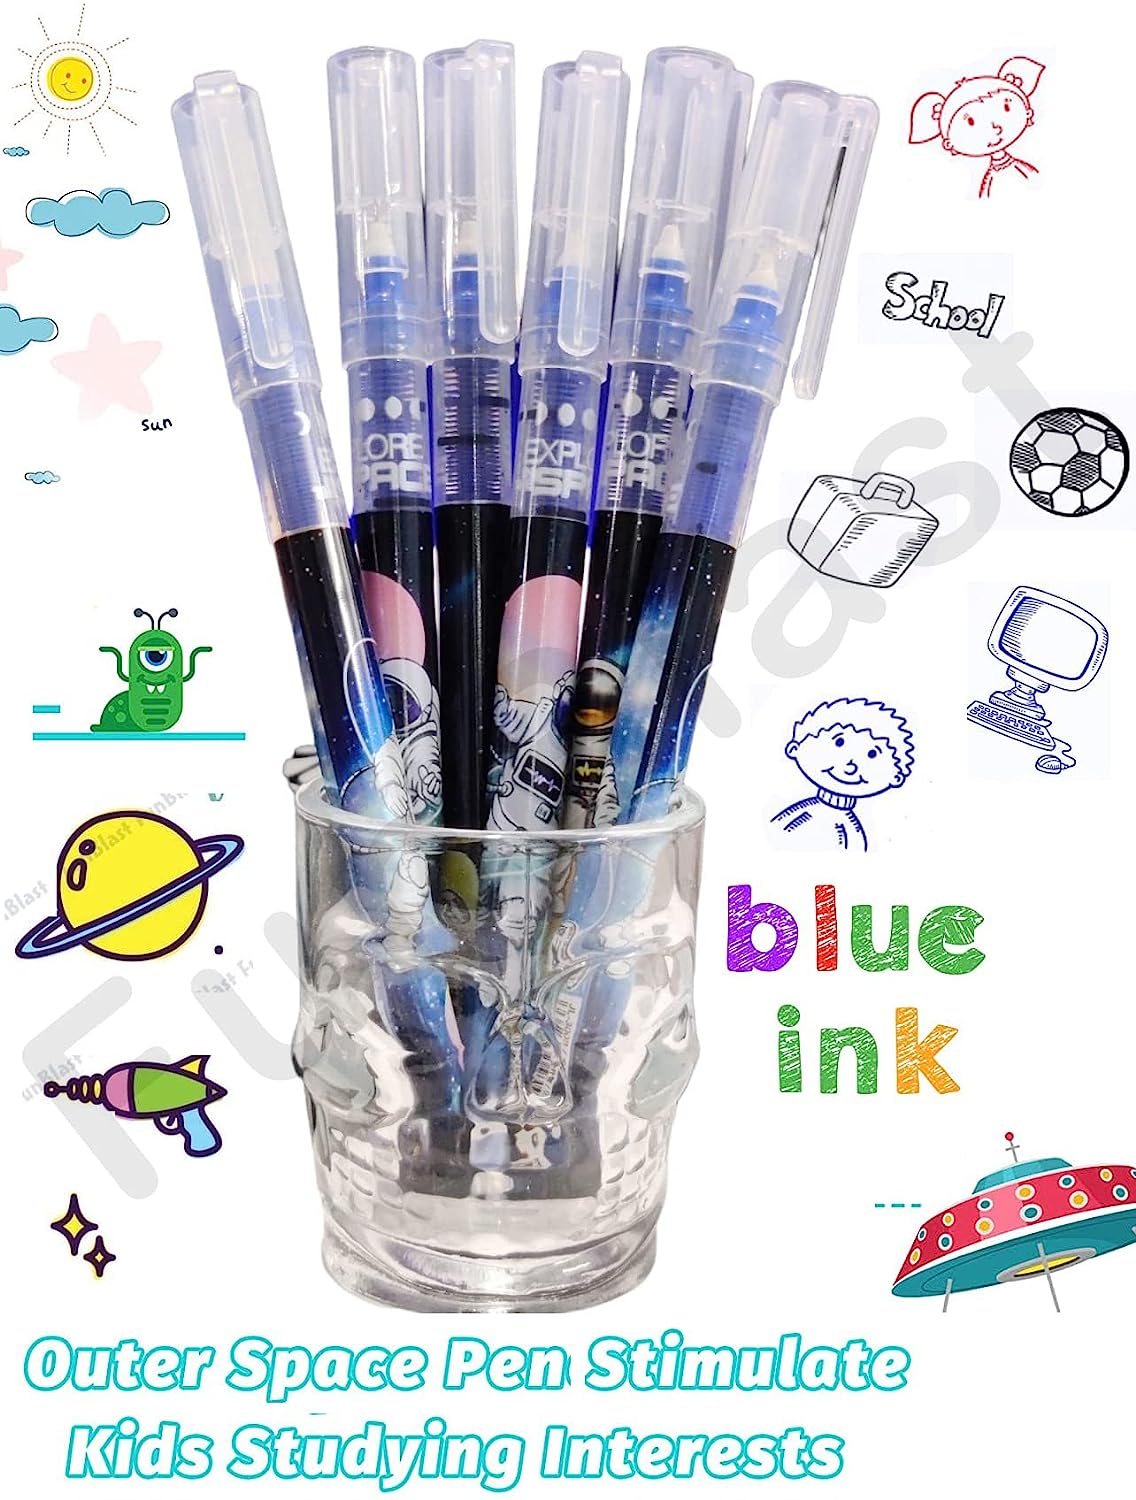 10 In 1 Pens For Kids Ball Pen Set For School & Office-Cartoon Pen